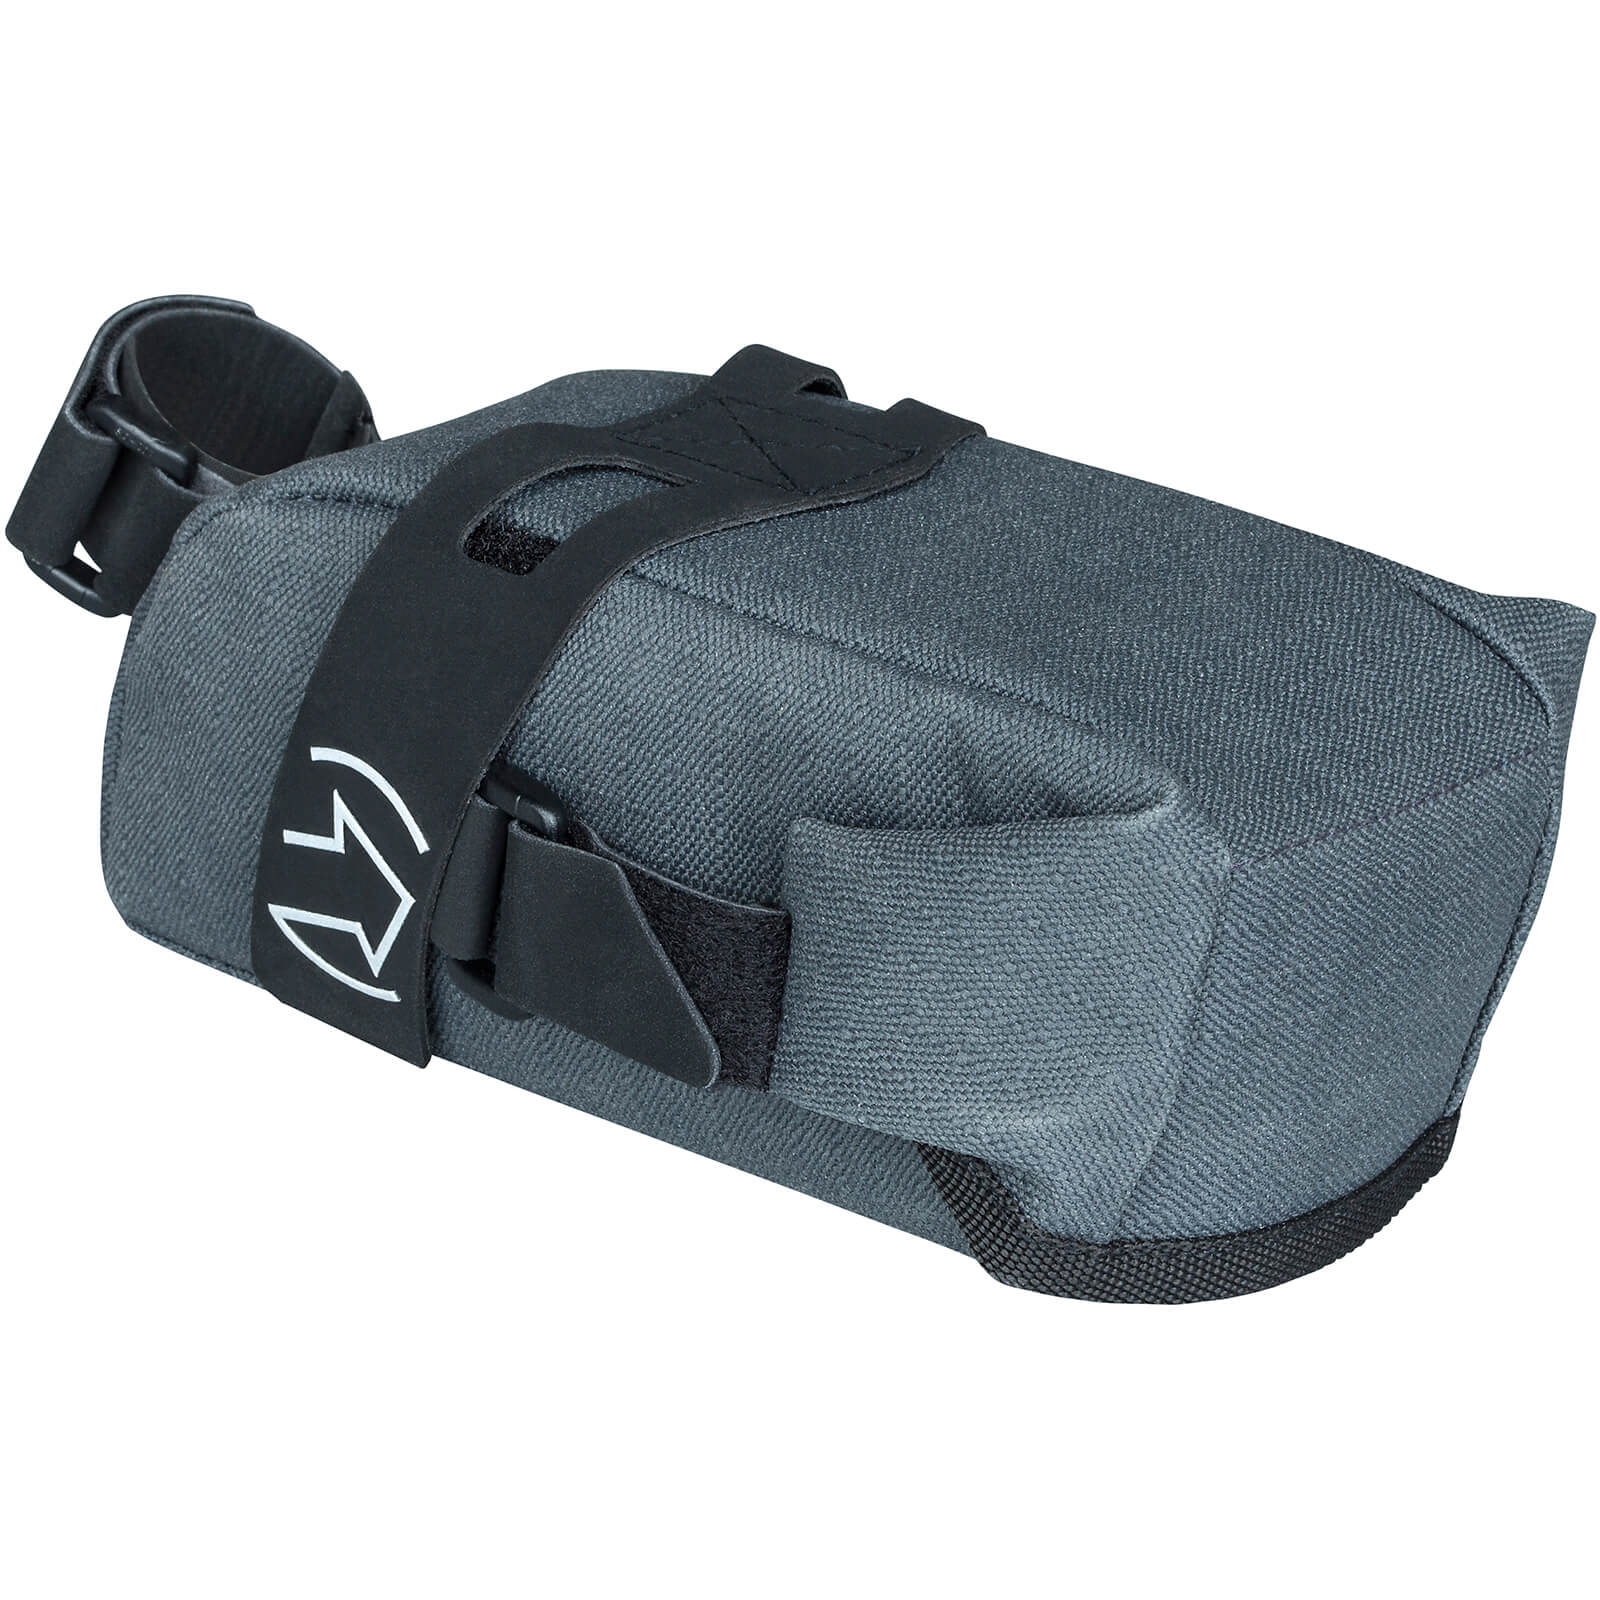 PRO Discover Saddle Bag - 0.6L